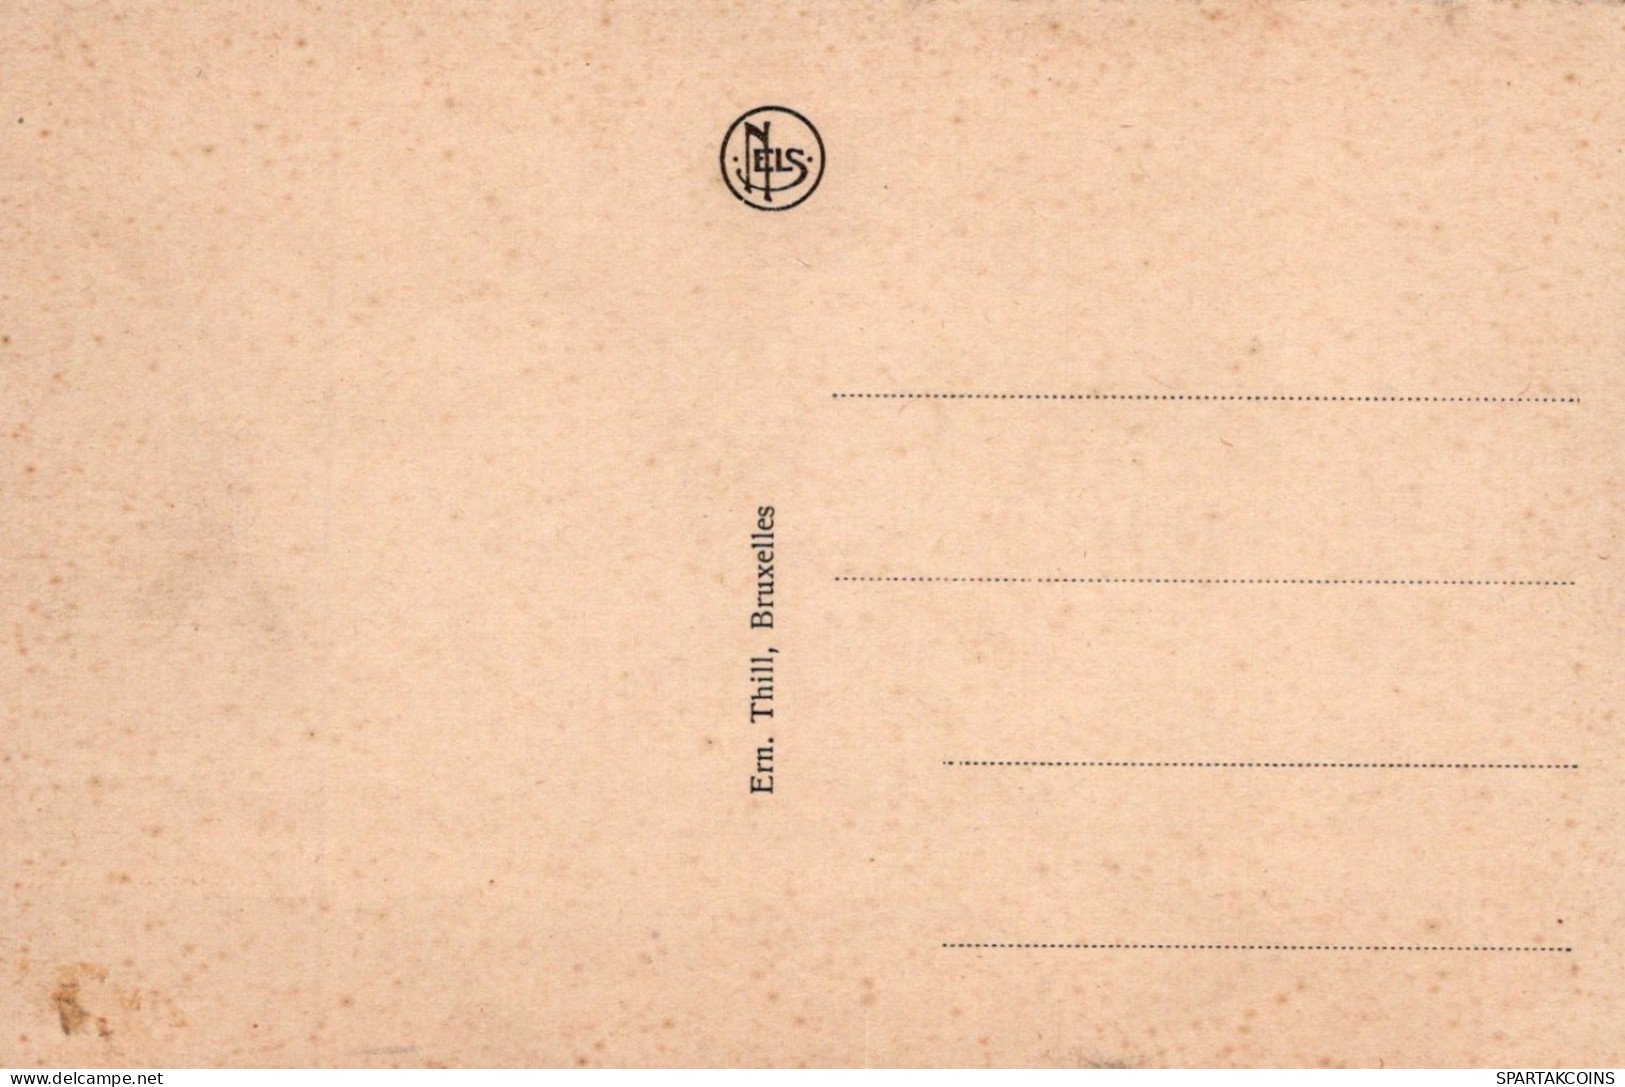 BELGIEN COO WASSERFALL Provinz Lüttich (Liège) Postkarte CPA Unposted #PAD130.A - Stavelot